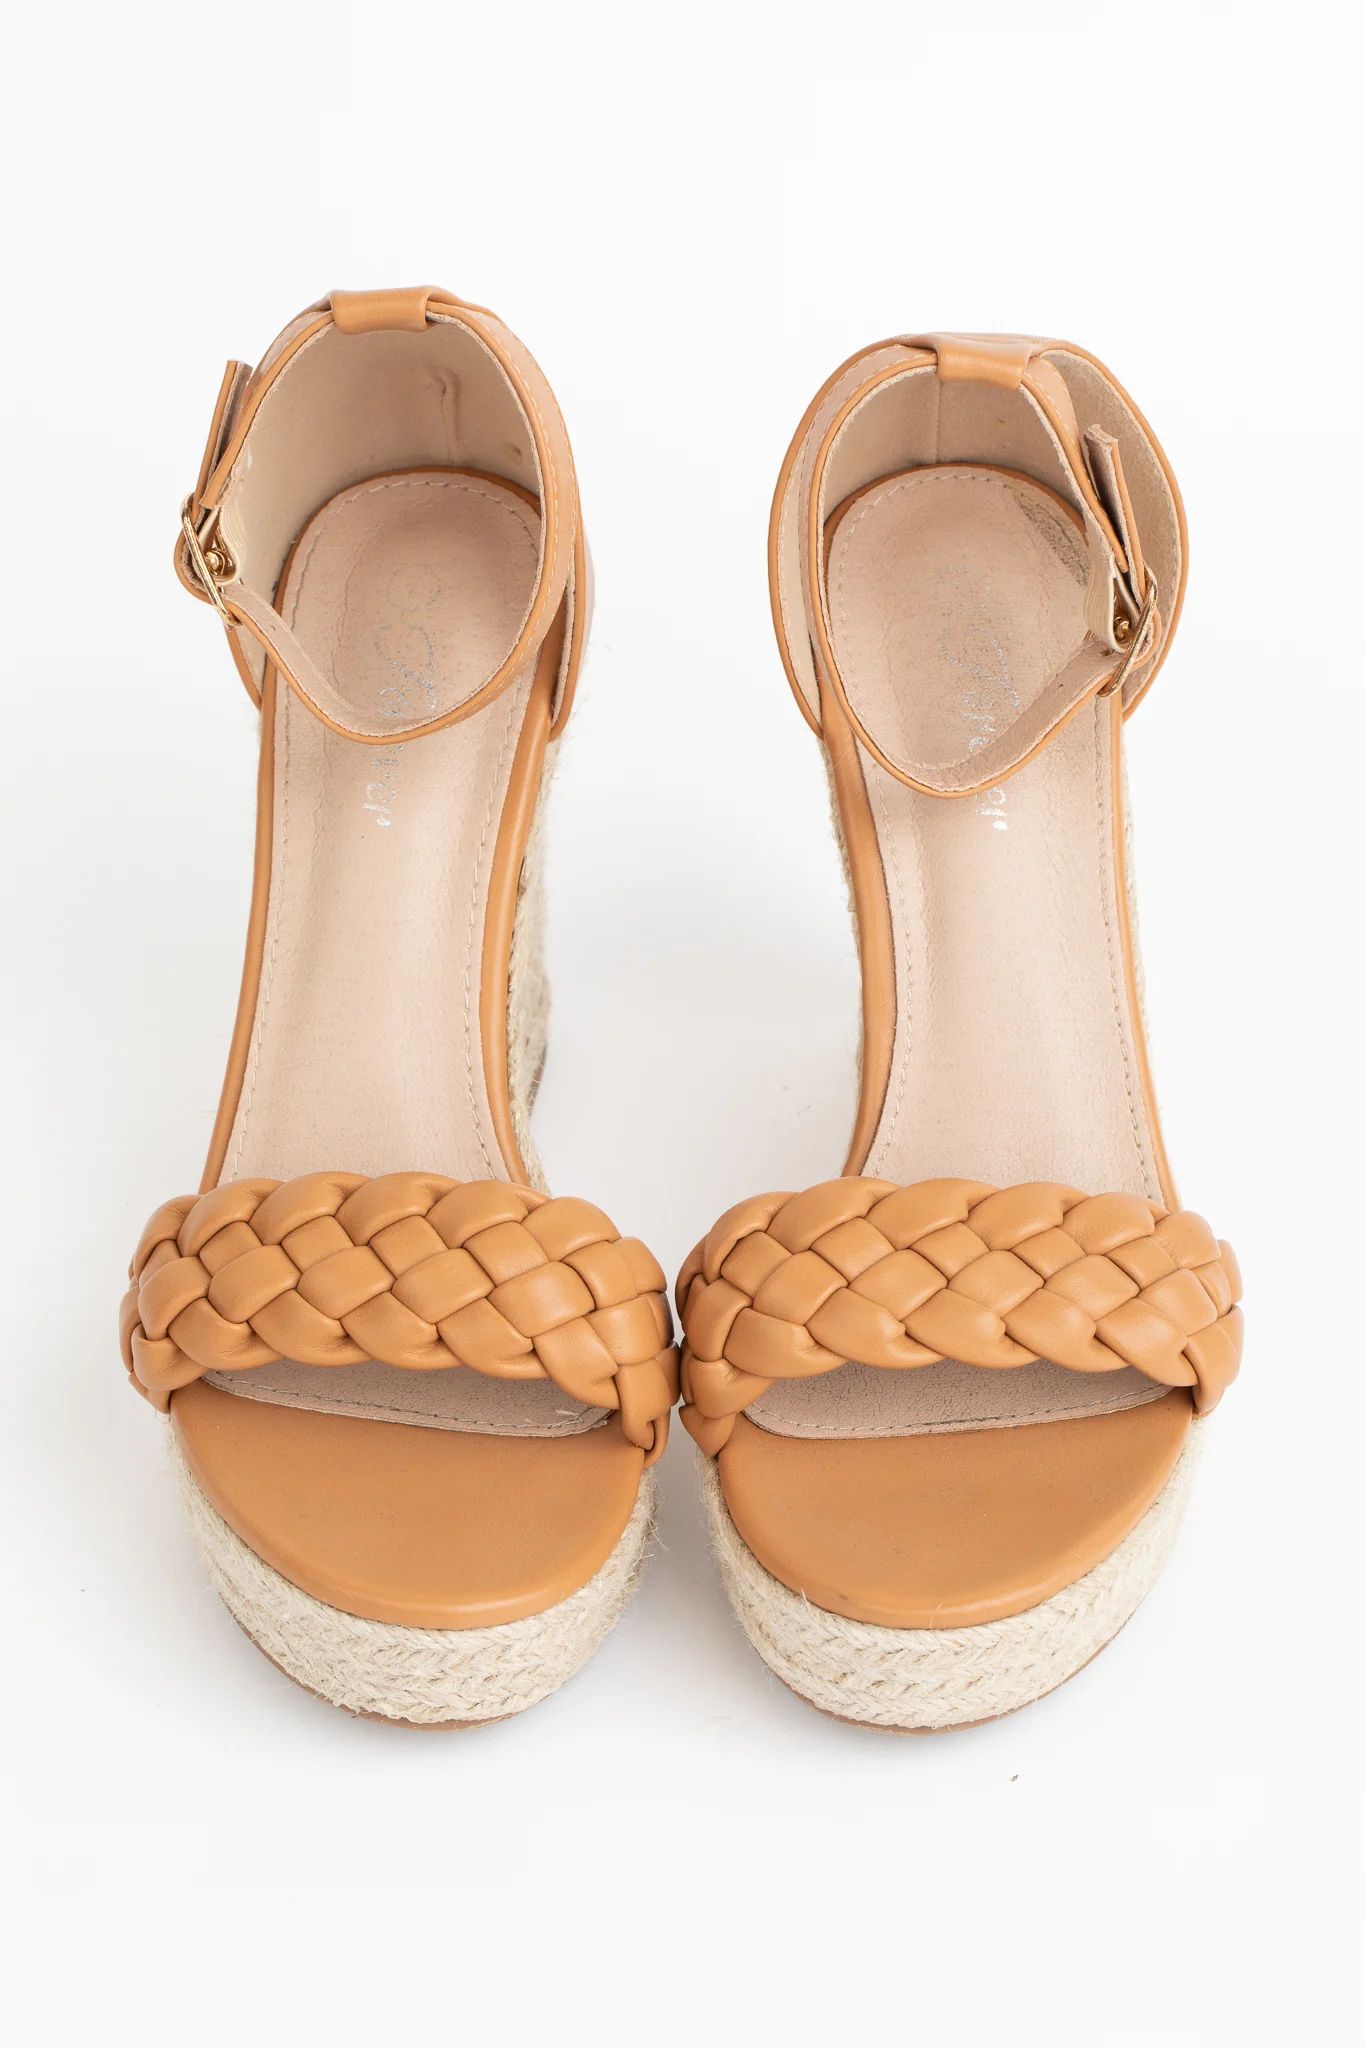 Women's Tan Platform Wedges - Ankle Strap Wedges | Avara